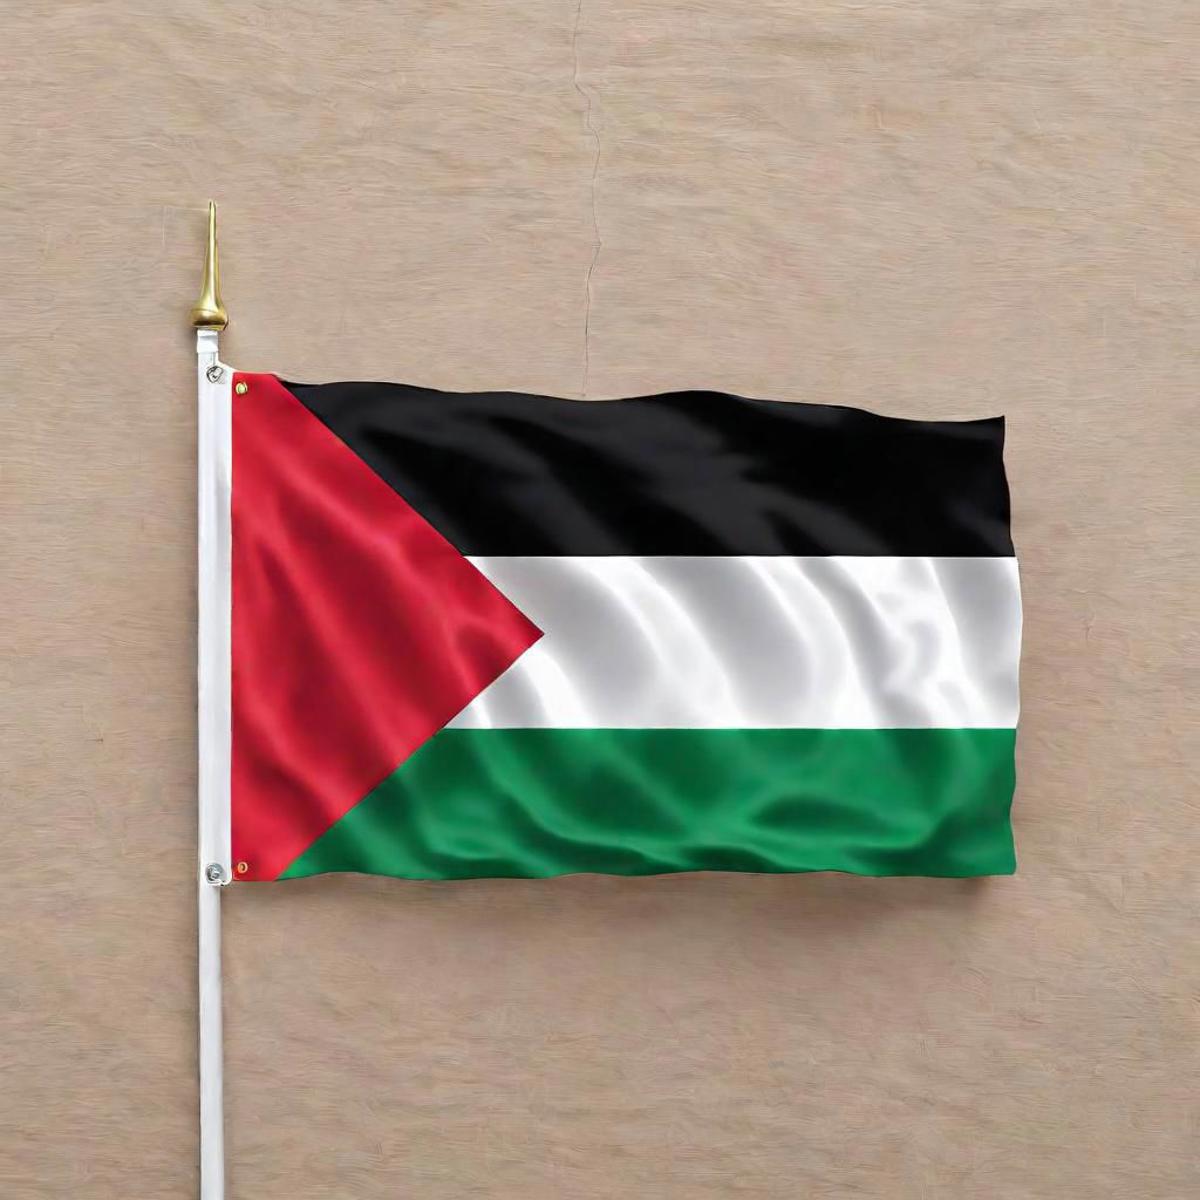 PalestineFlagSdxl image by generativeart_byUmut